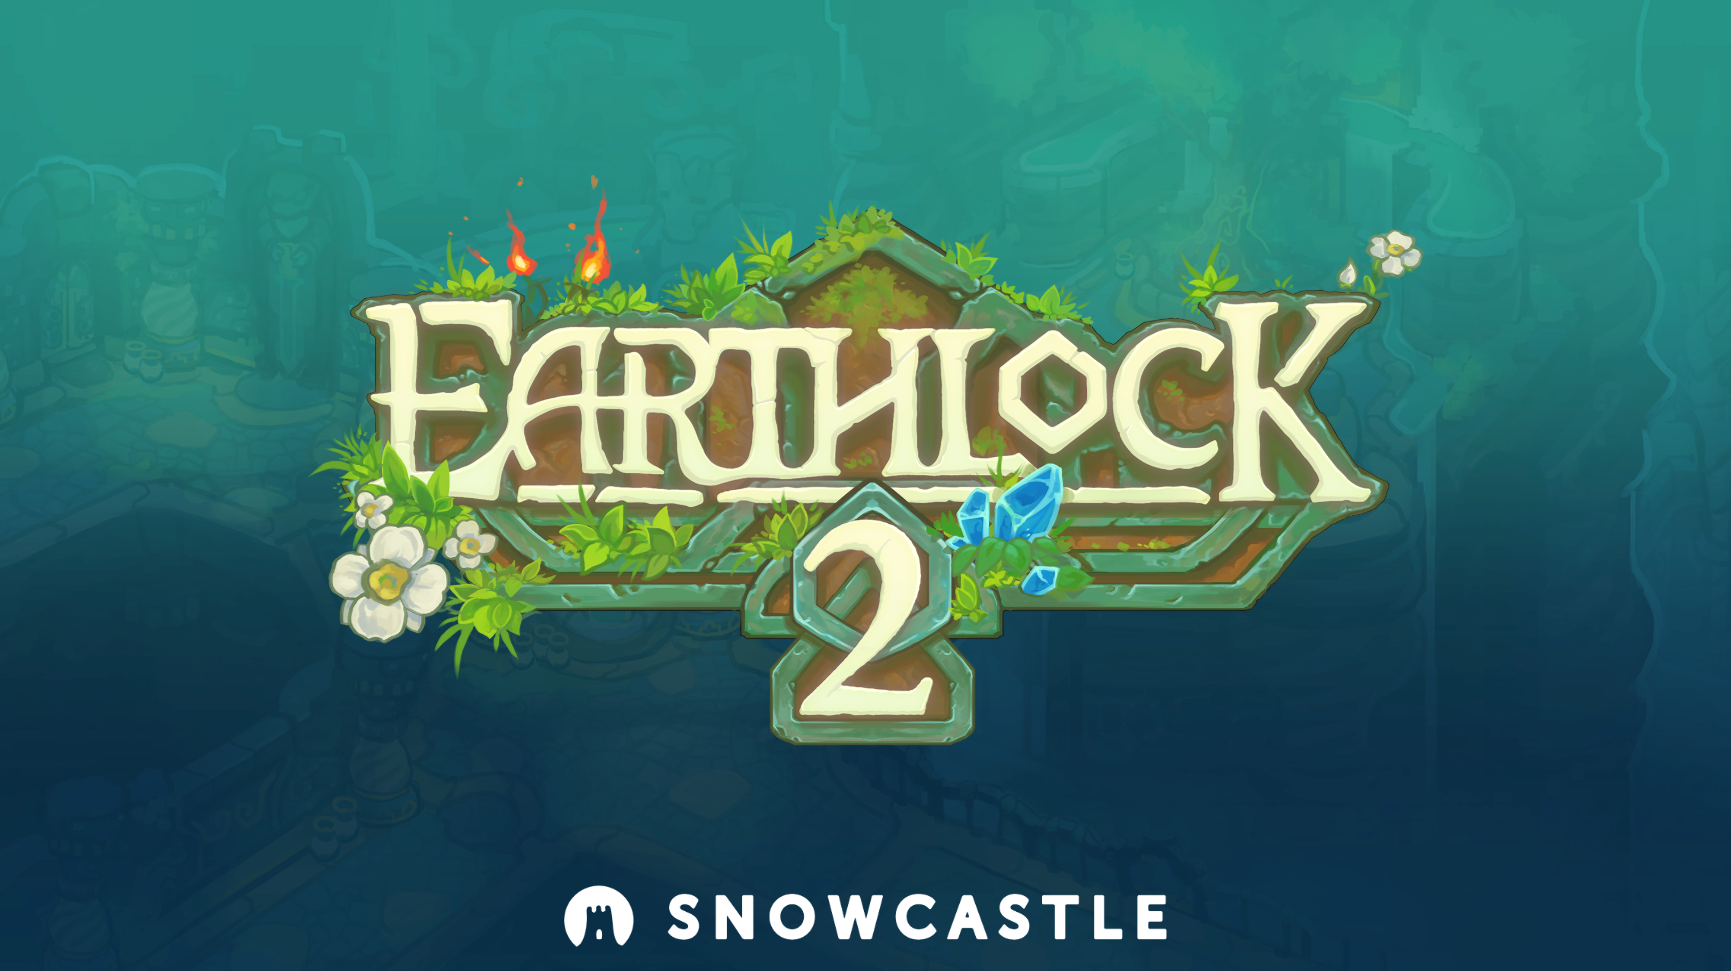 Earthlock2 snowcastle games